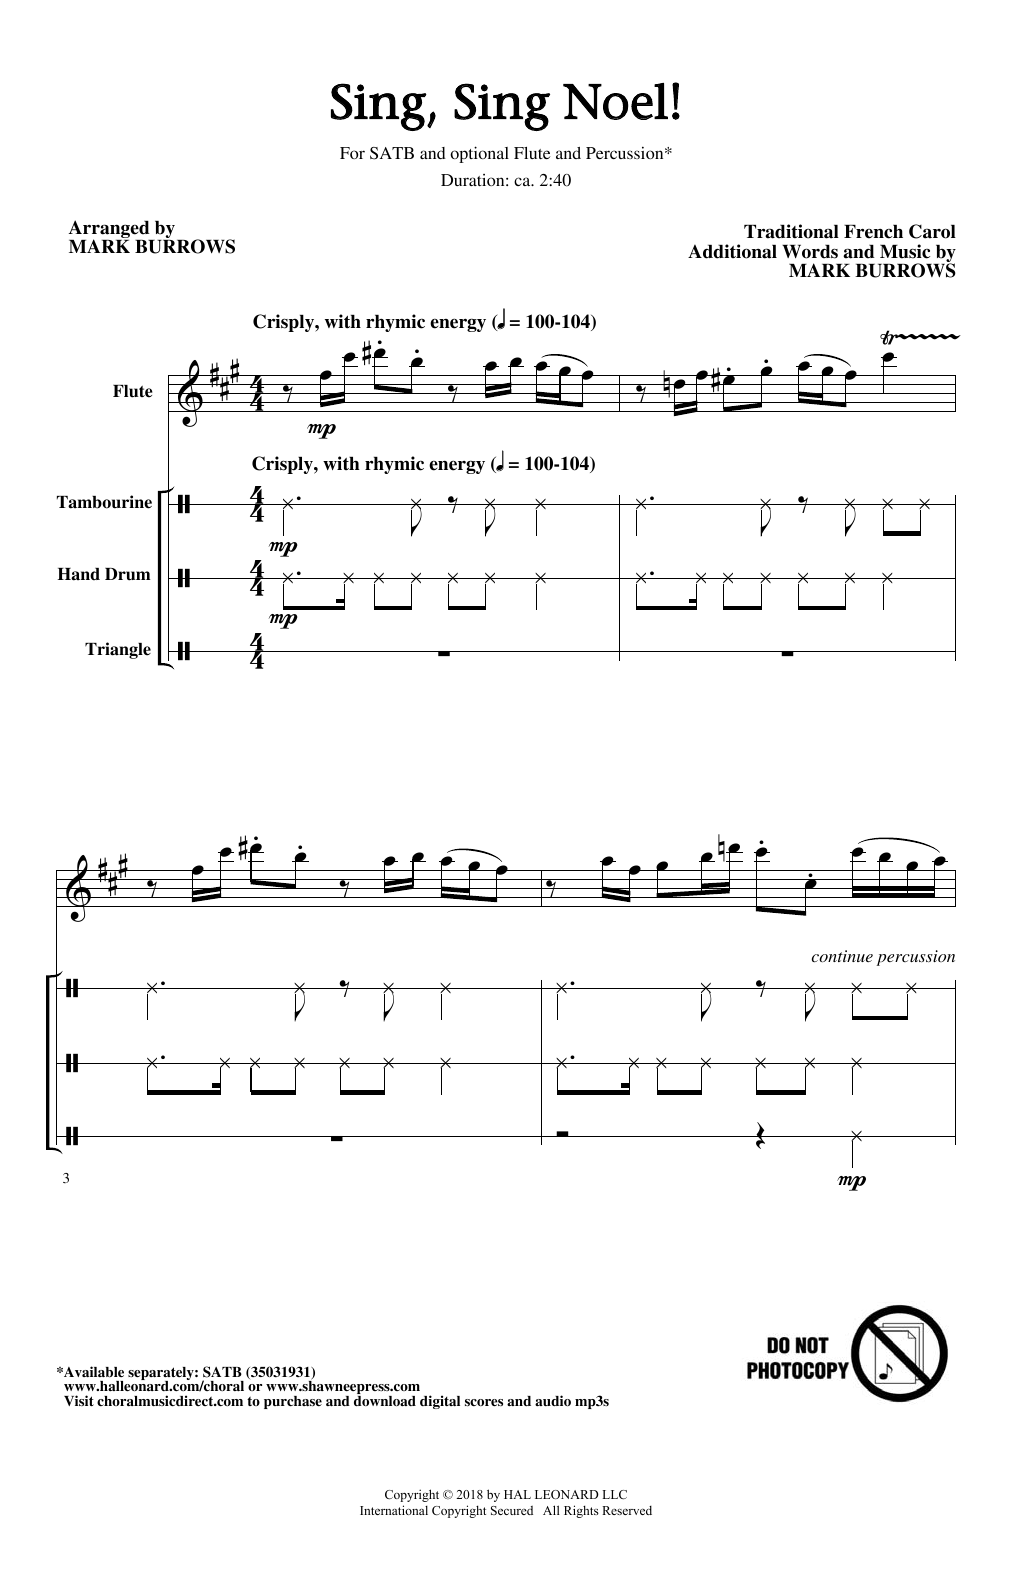 Mark Burrows Sing, Sing Noel! Sheet Music Notes & Chords for SATB - Download or Print PDF